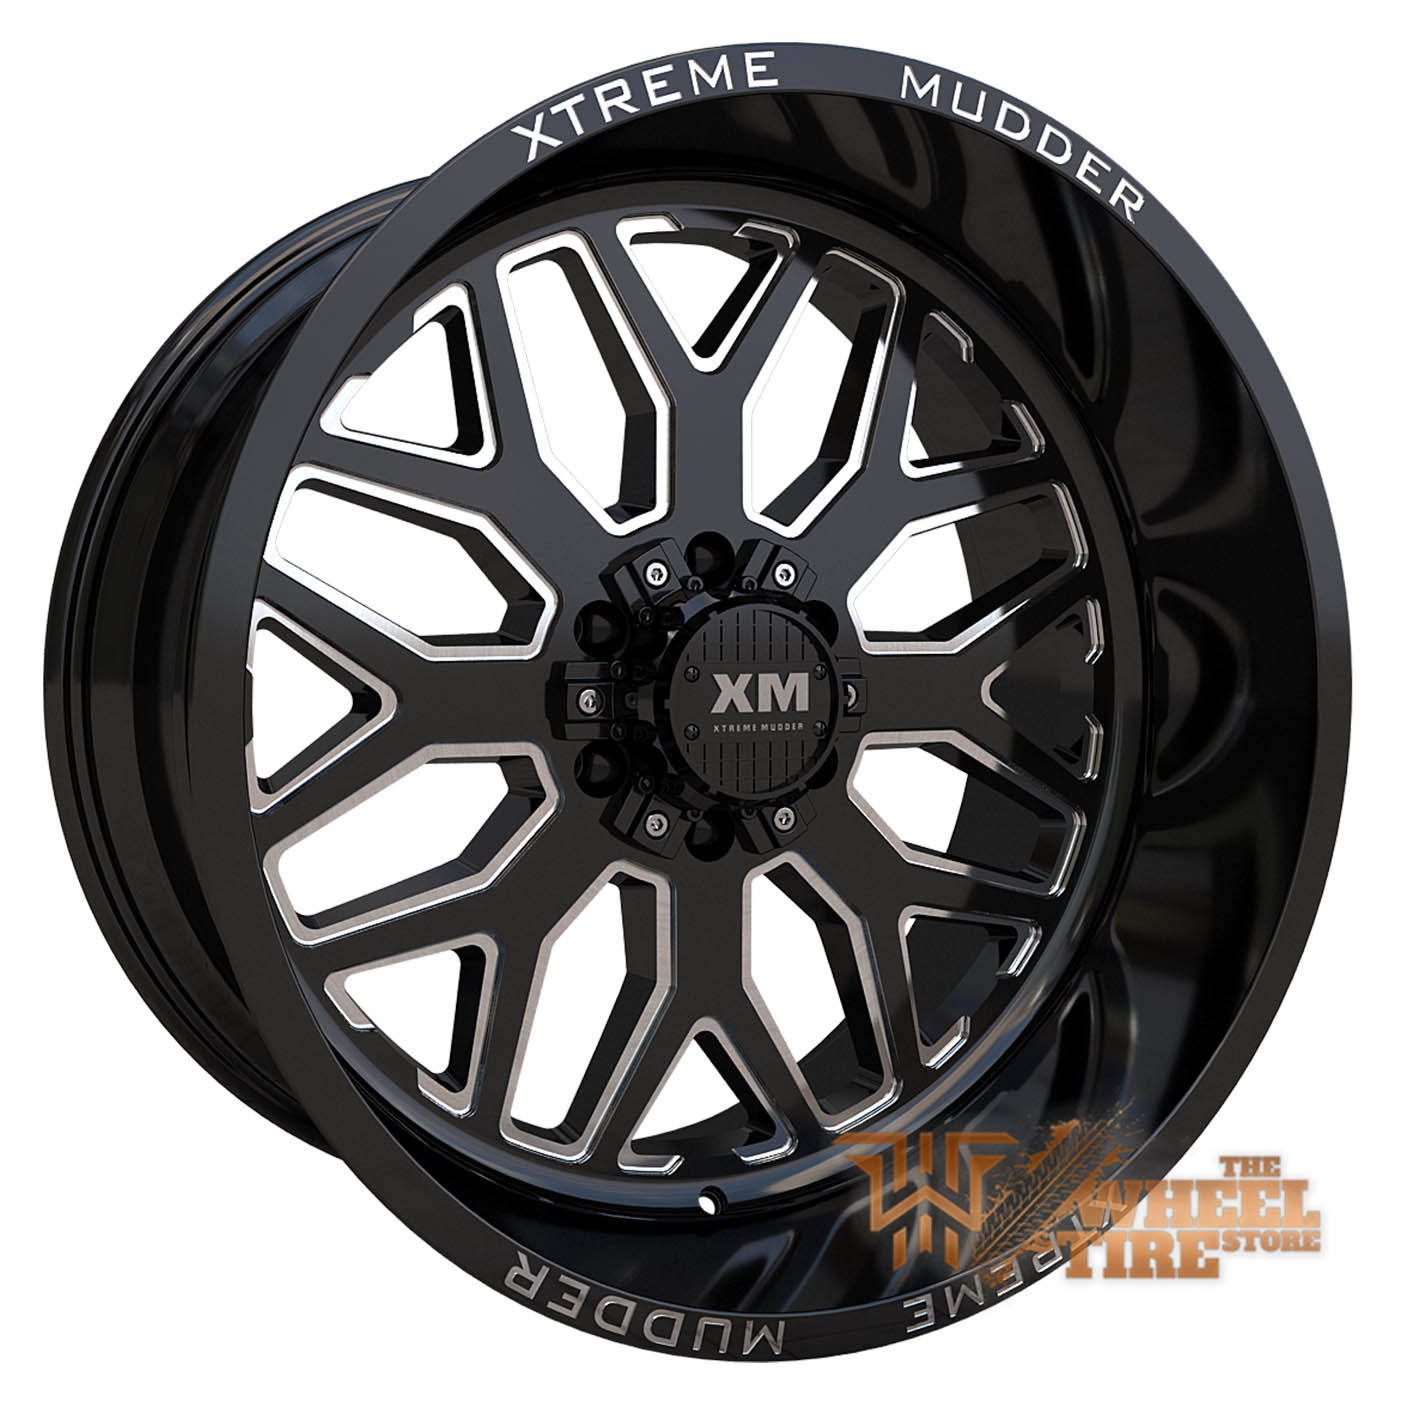 XTREME MUDDER XM-401 Wheel in Gloss Black Milled (Set of 4)